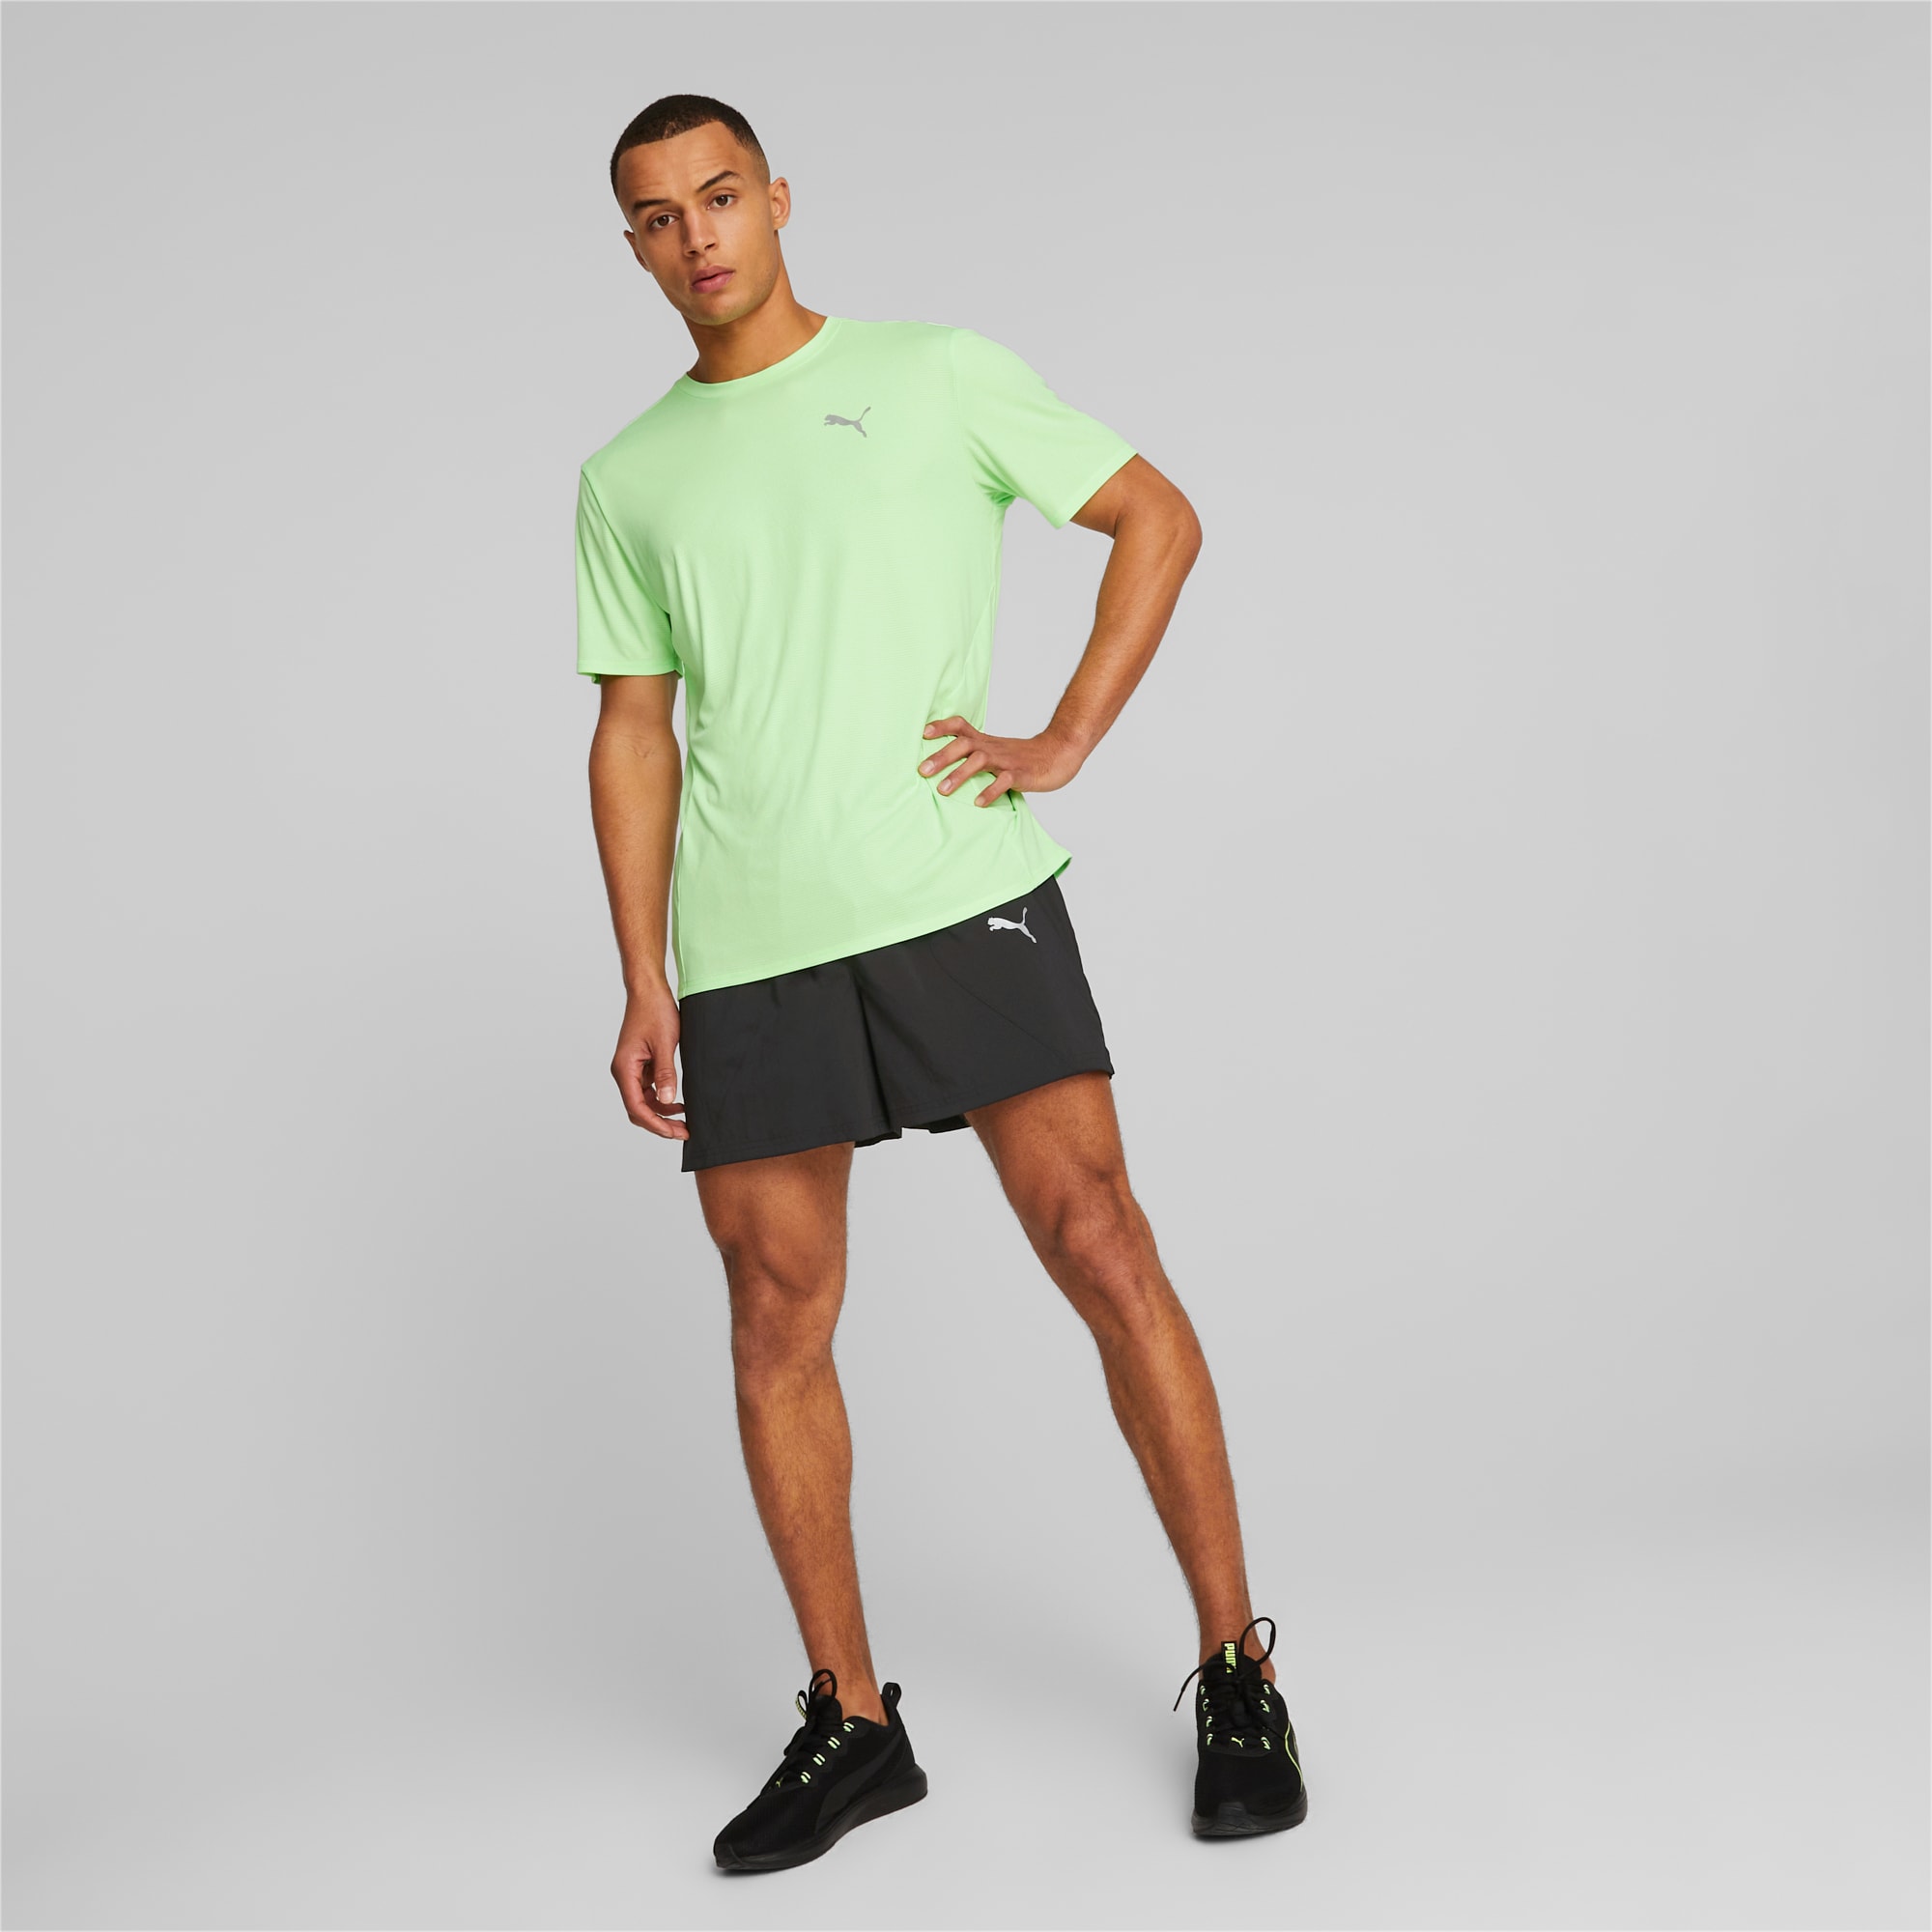 PUMA Run Favourite Woven 5 Running Shorts Men, Black, Size XS, Clothing